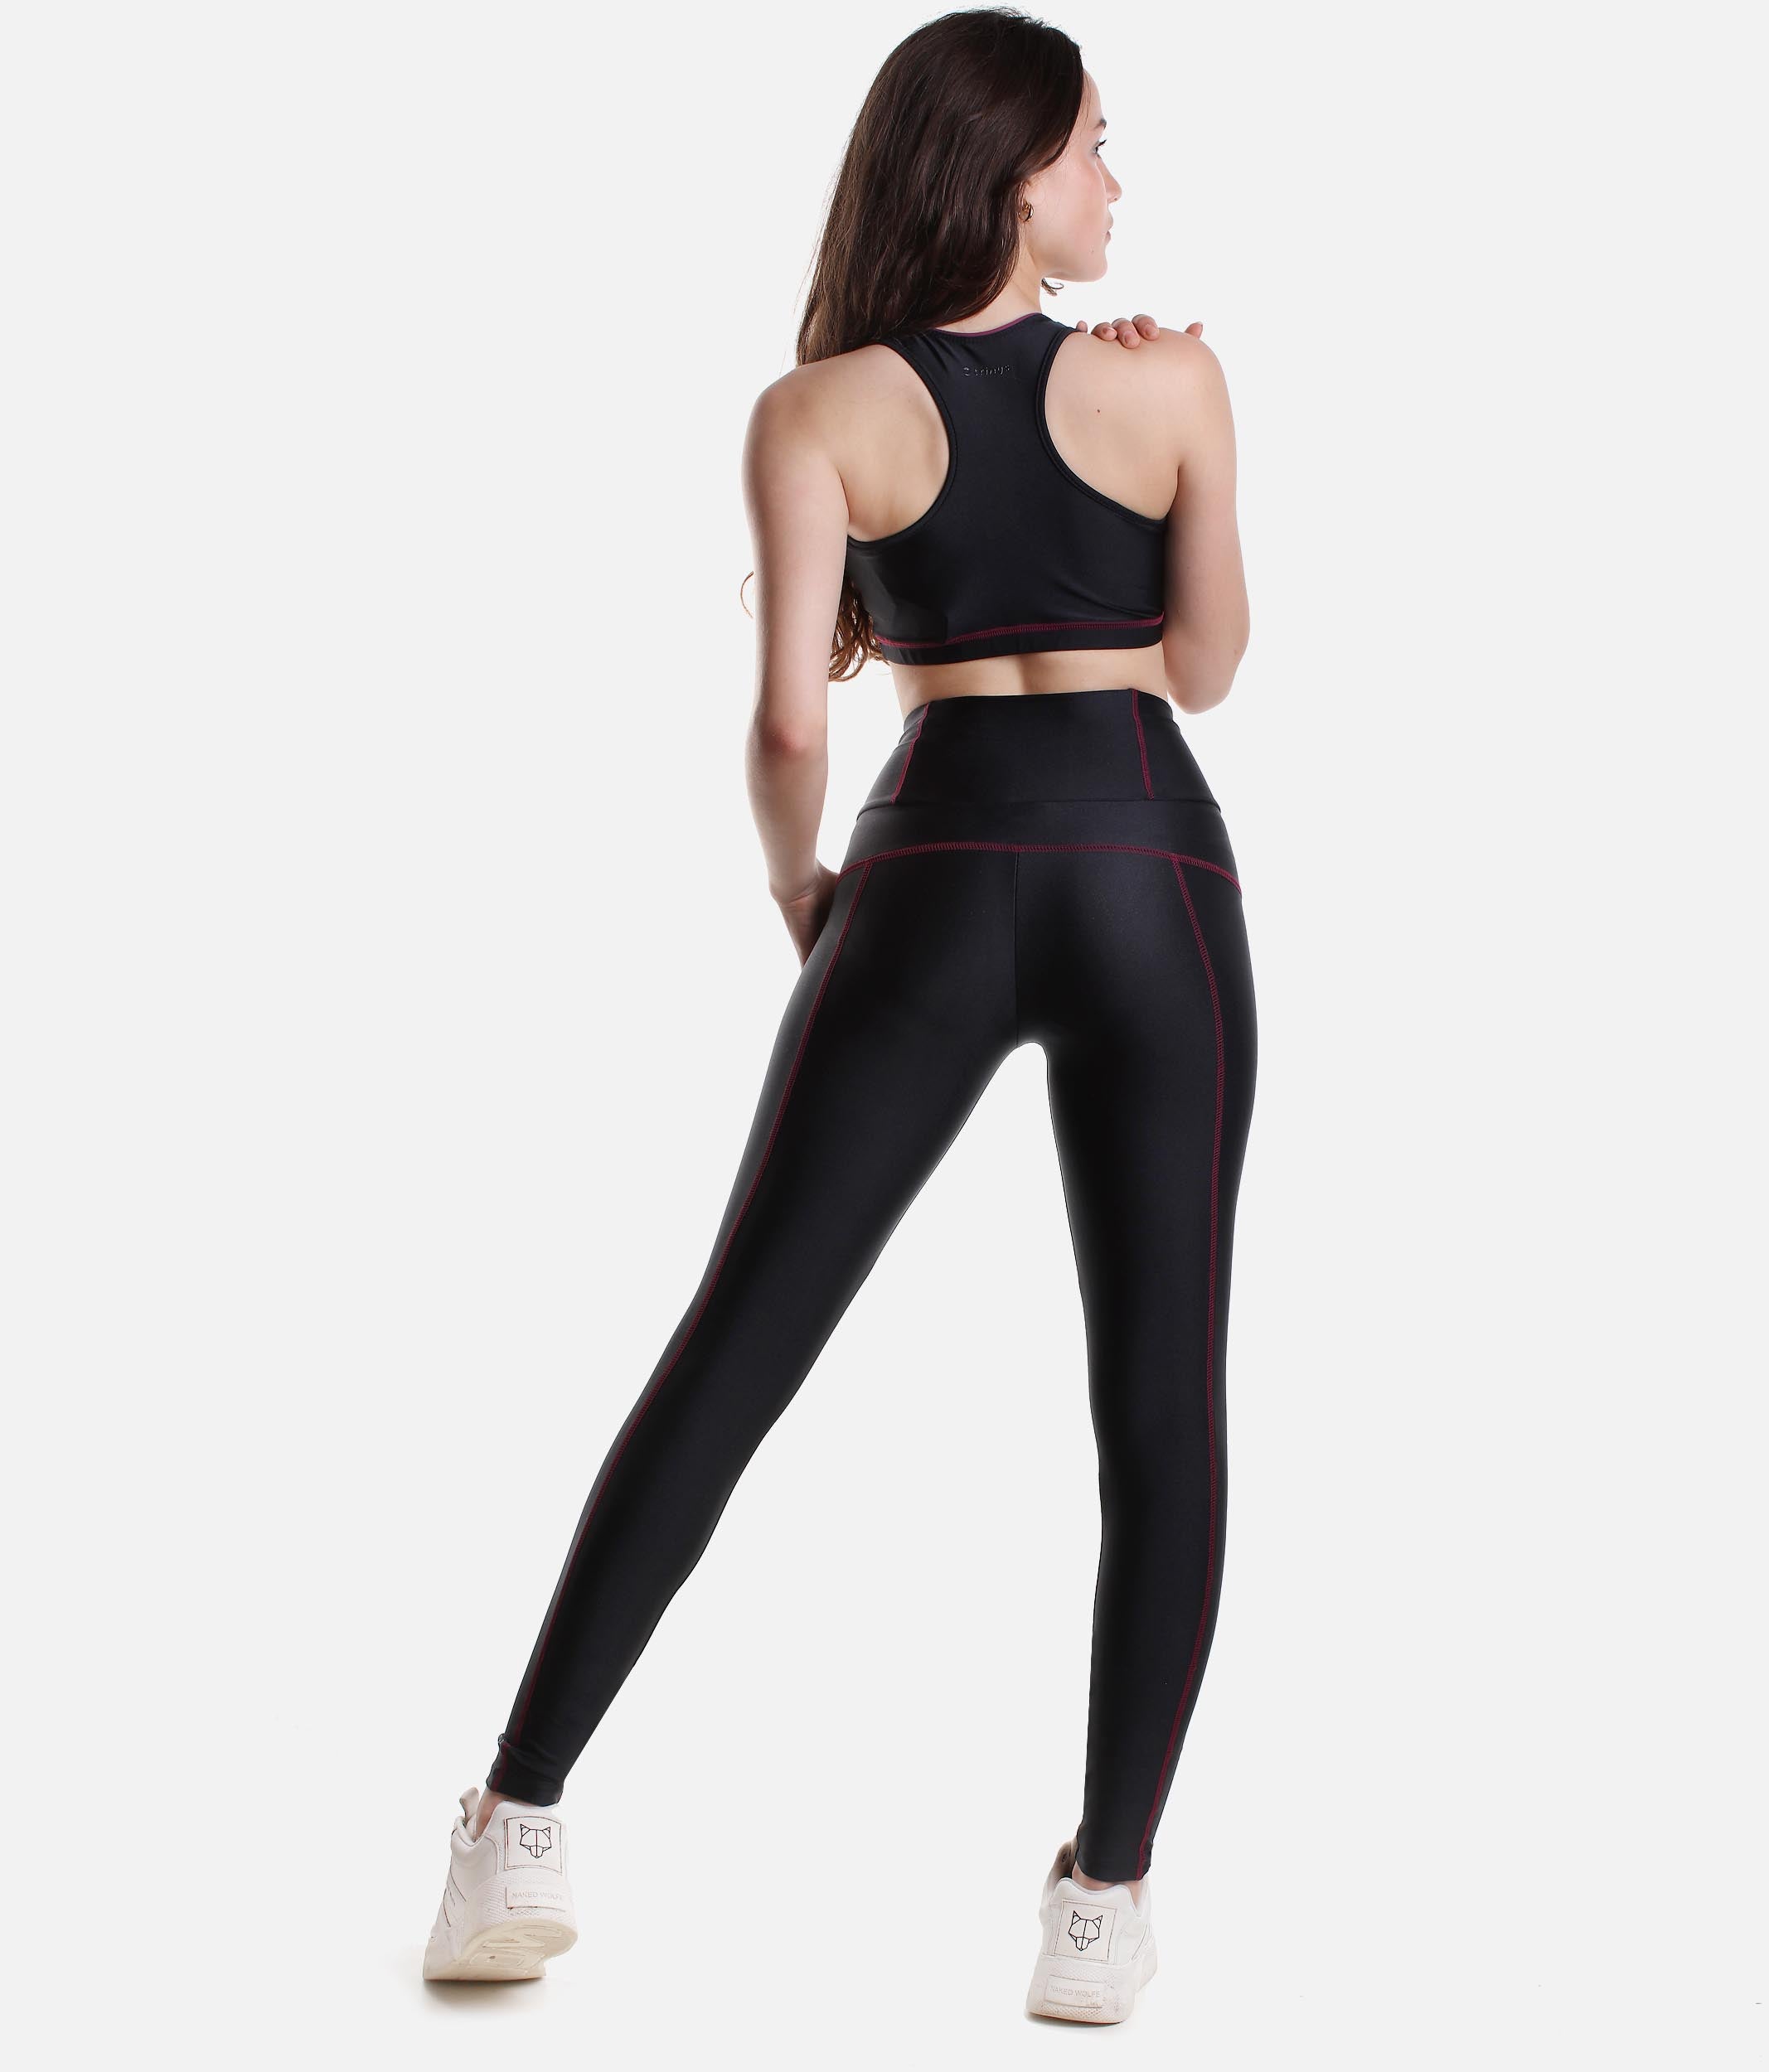 Danskin, Pants & Jumpsuits, Danskin High Rise Cropped Workout Leggings  Sage Green Size S